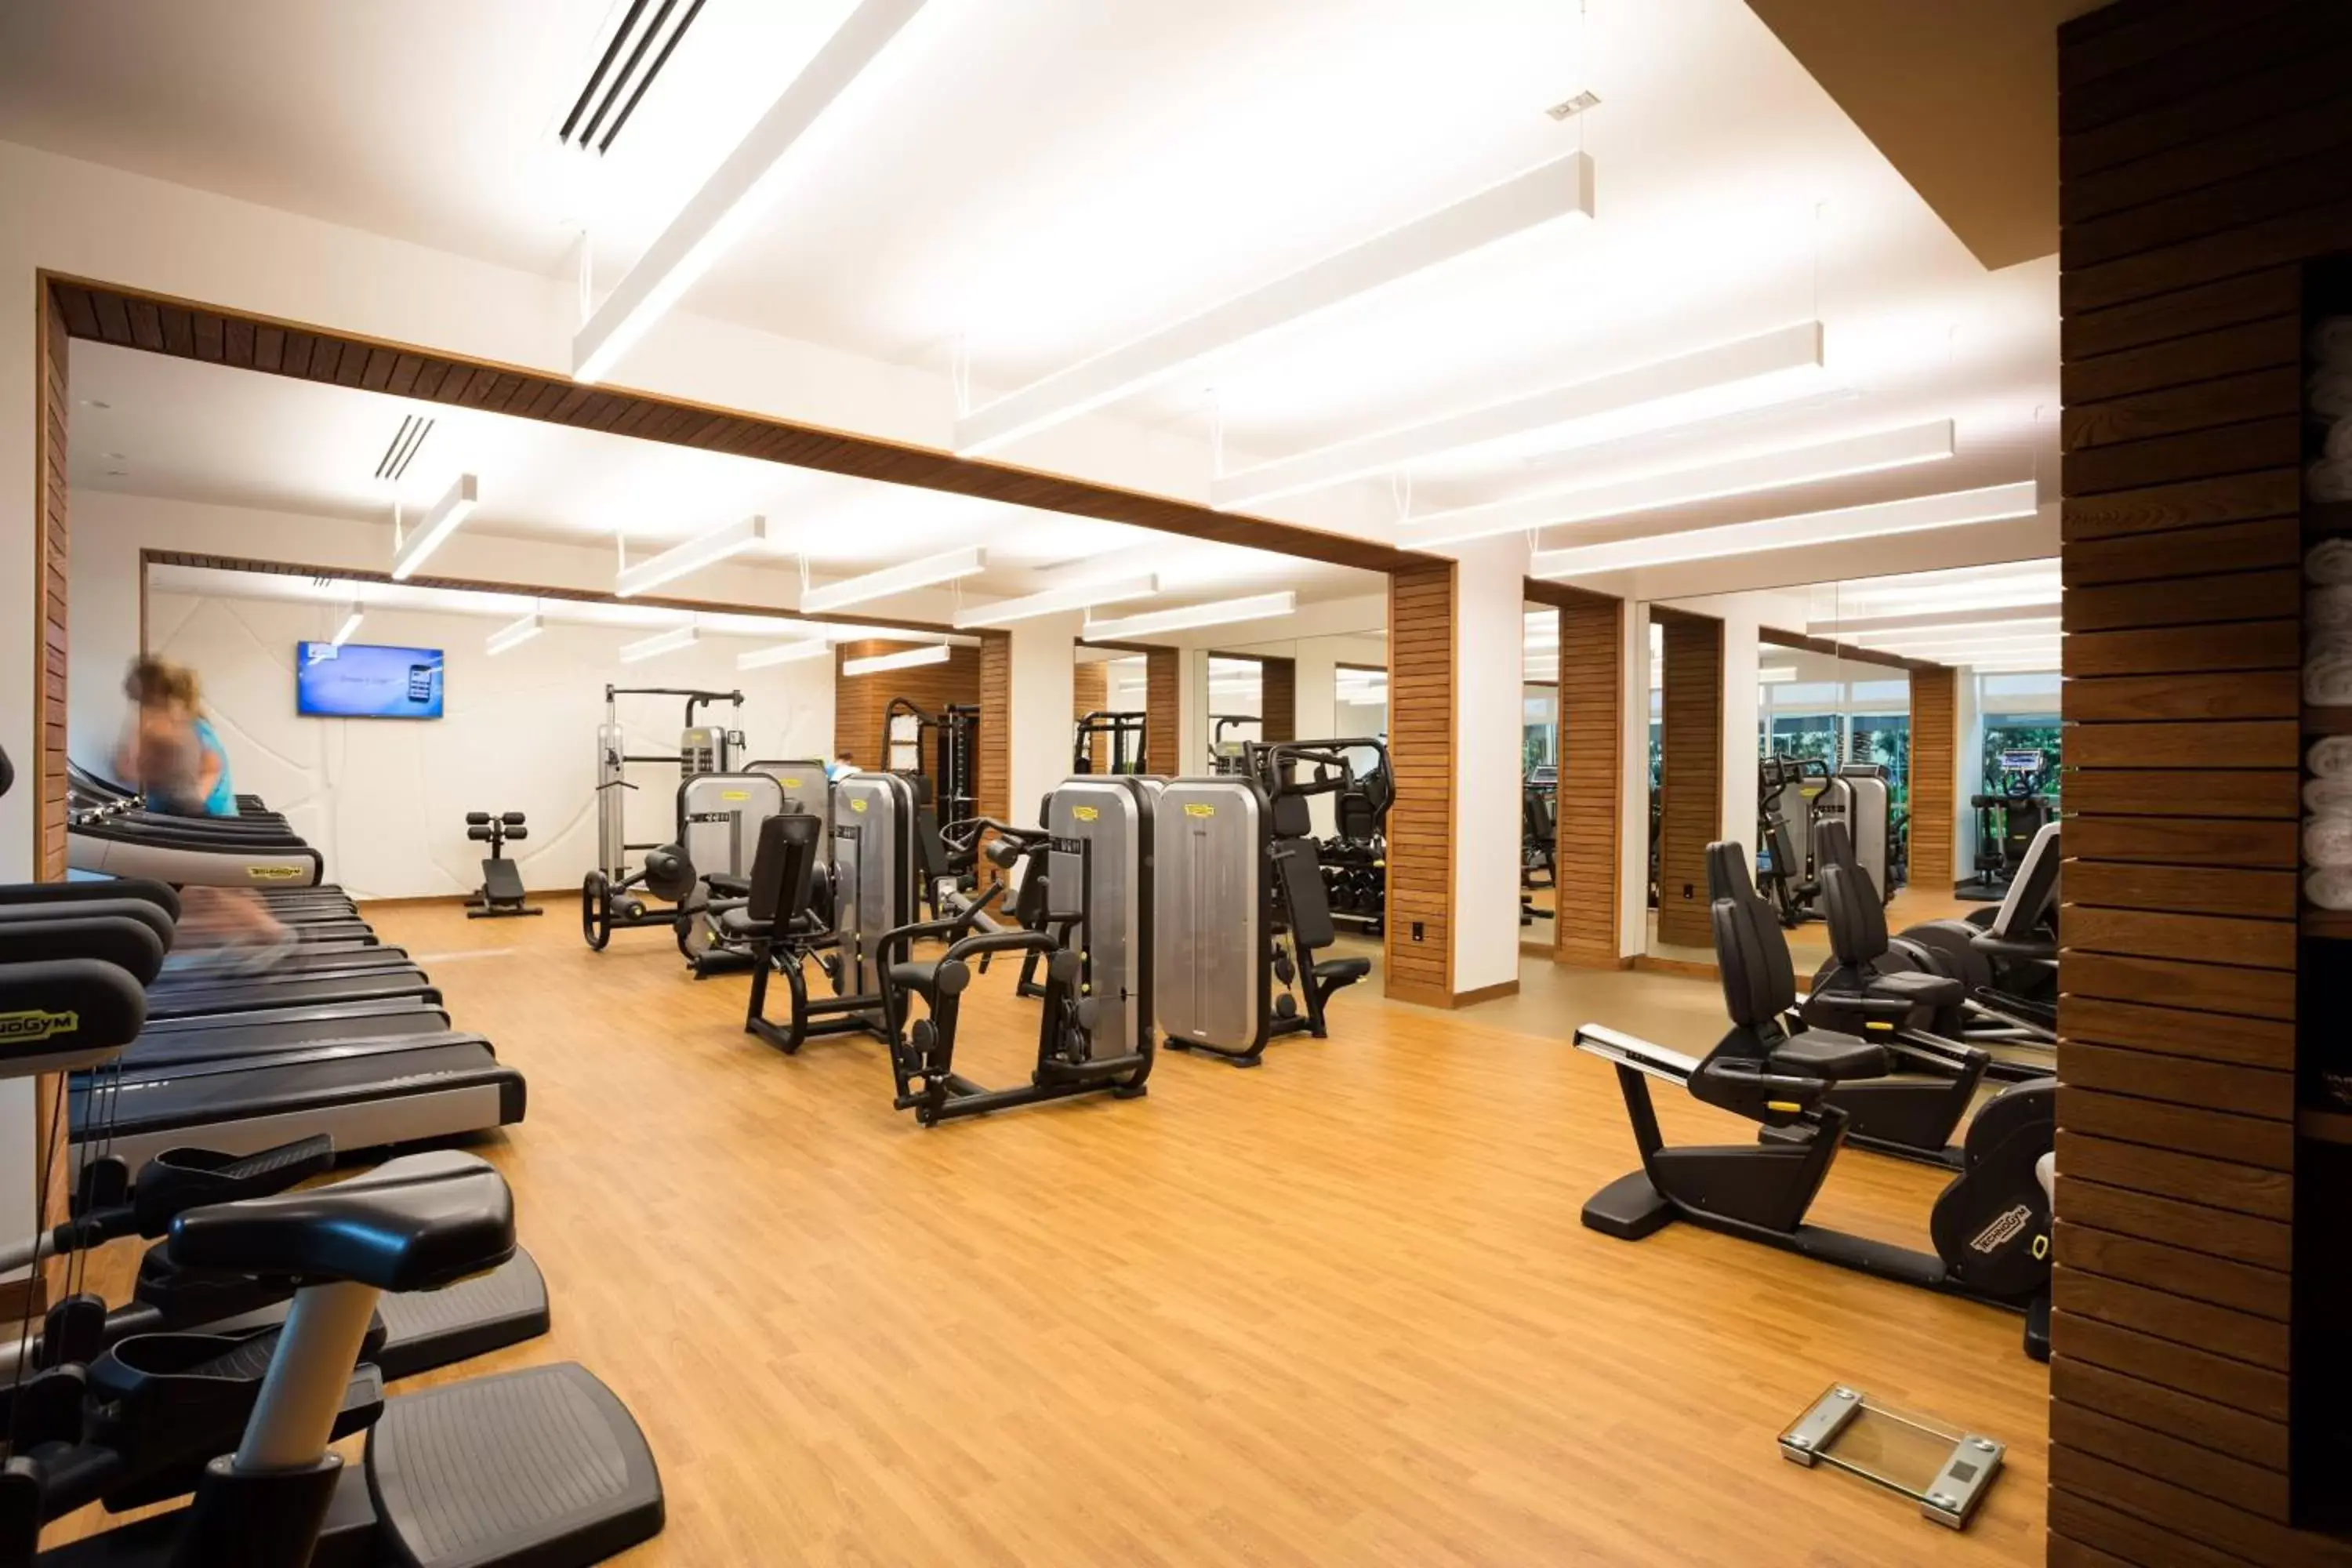 Fitness centre/facilities, Fitness Center/Facilities in JW Marriott Marco Island Beach Resort